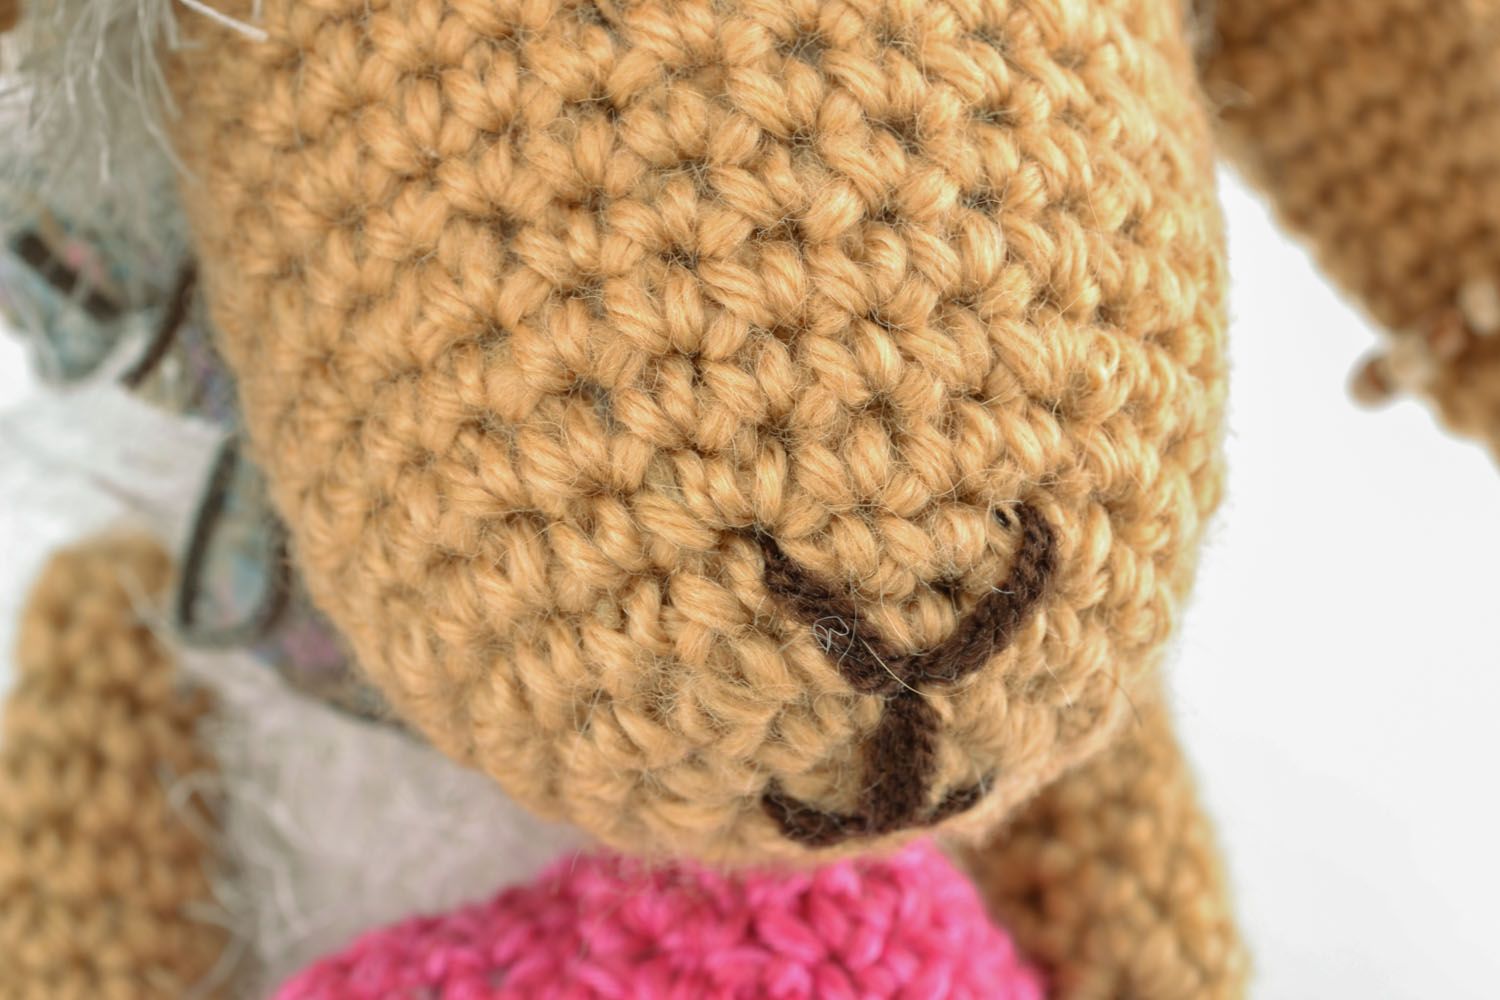 Homemade crochet toy photo 2